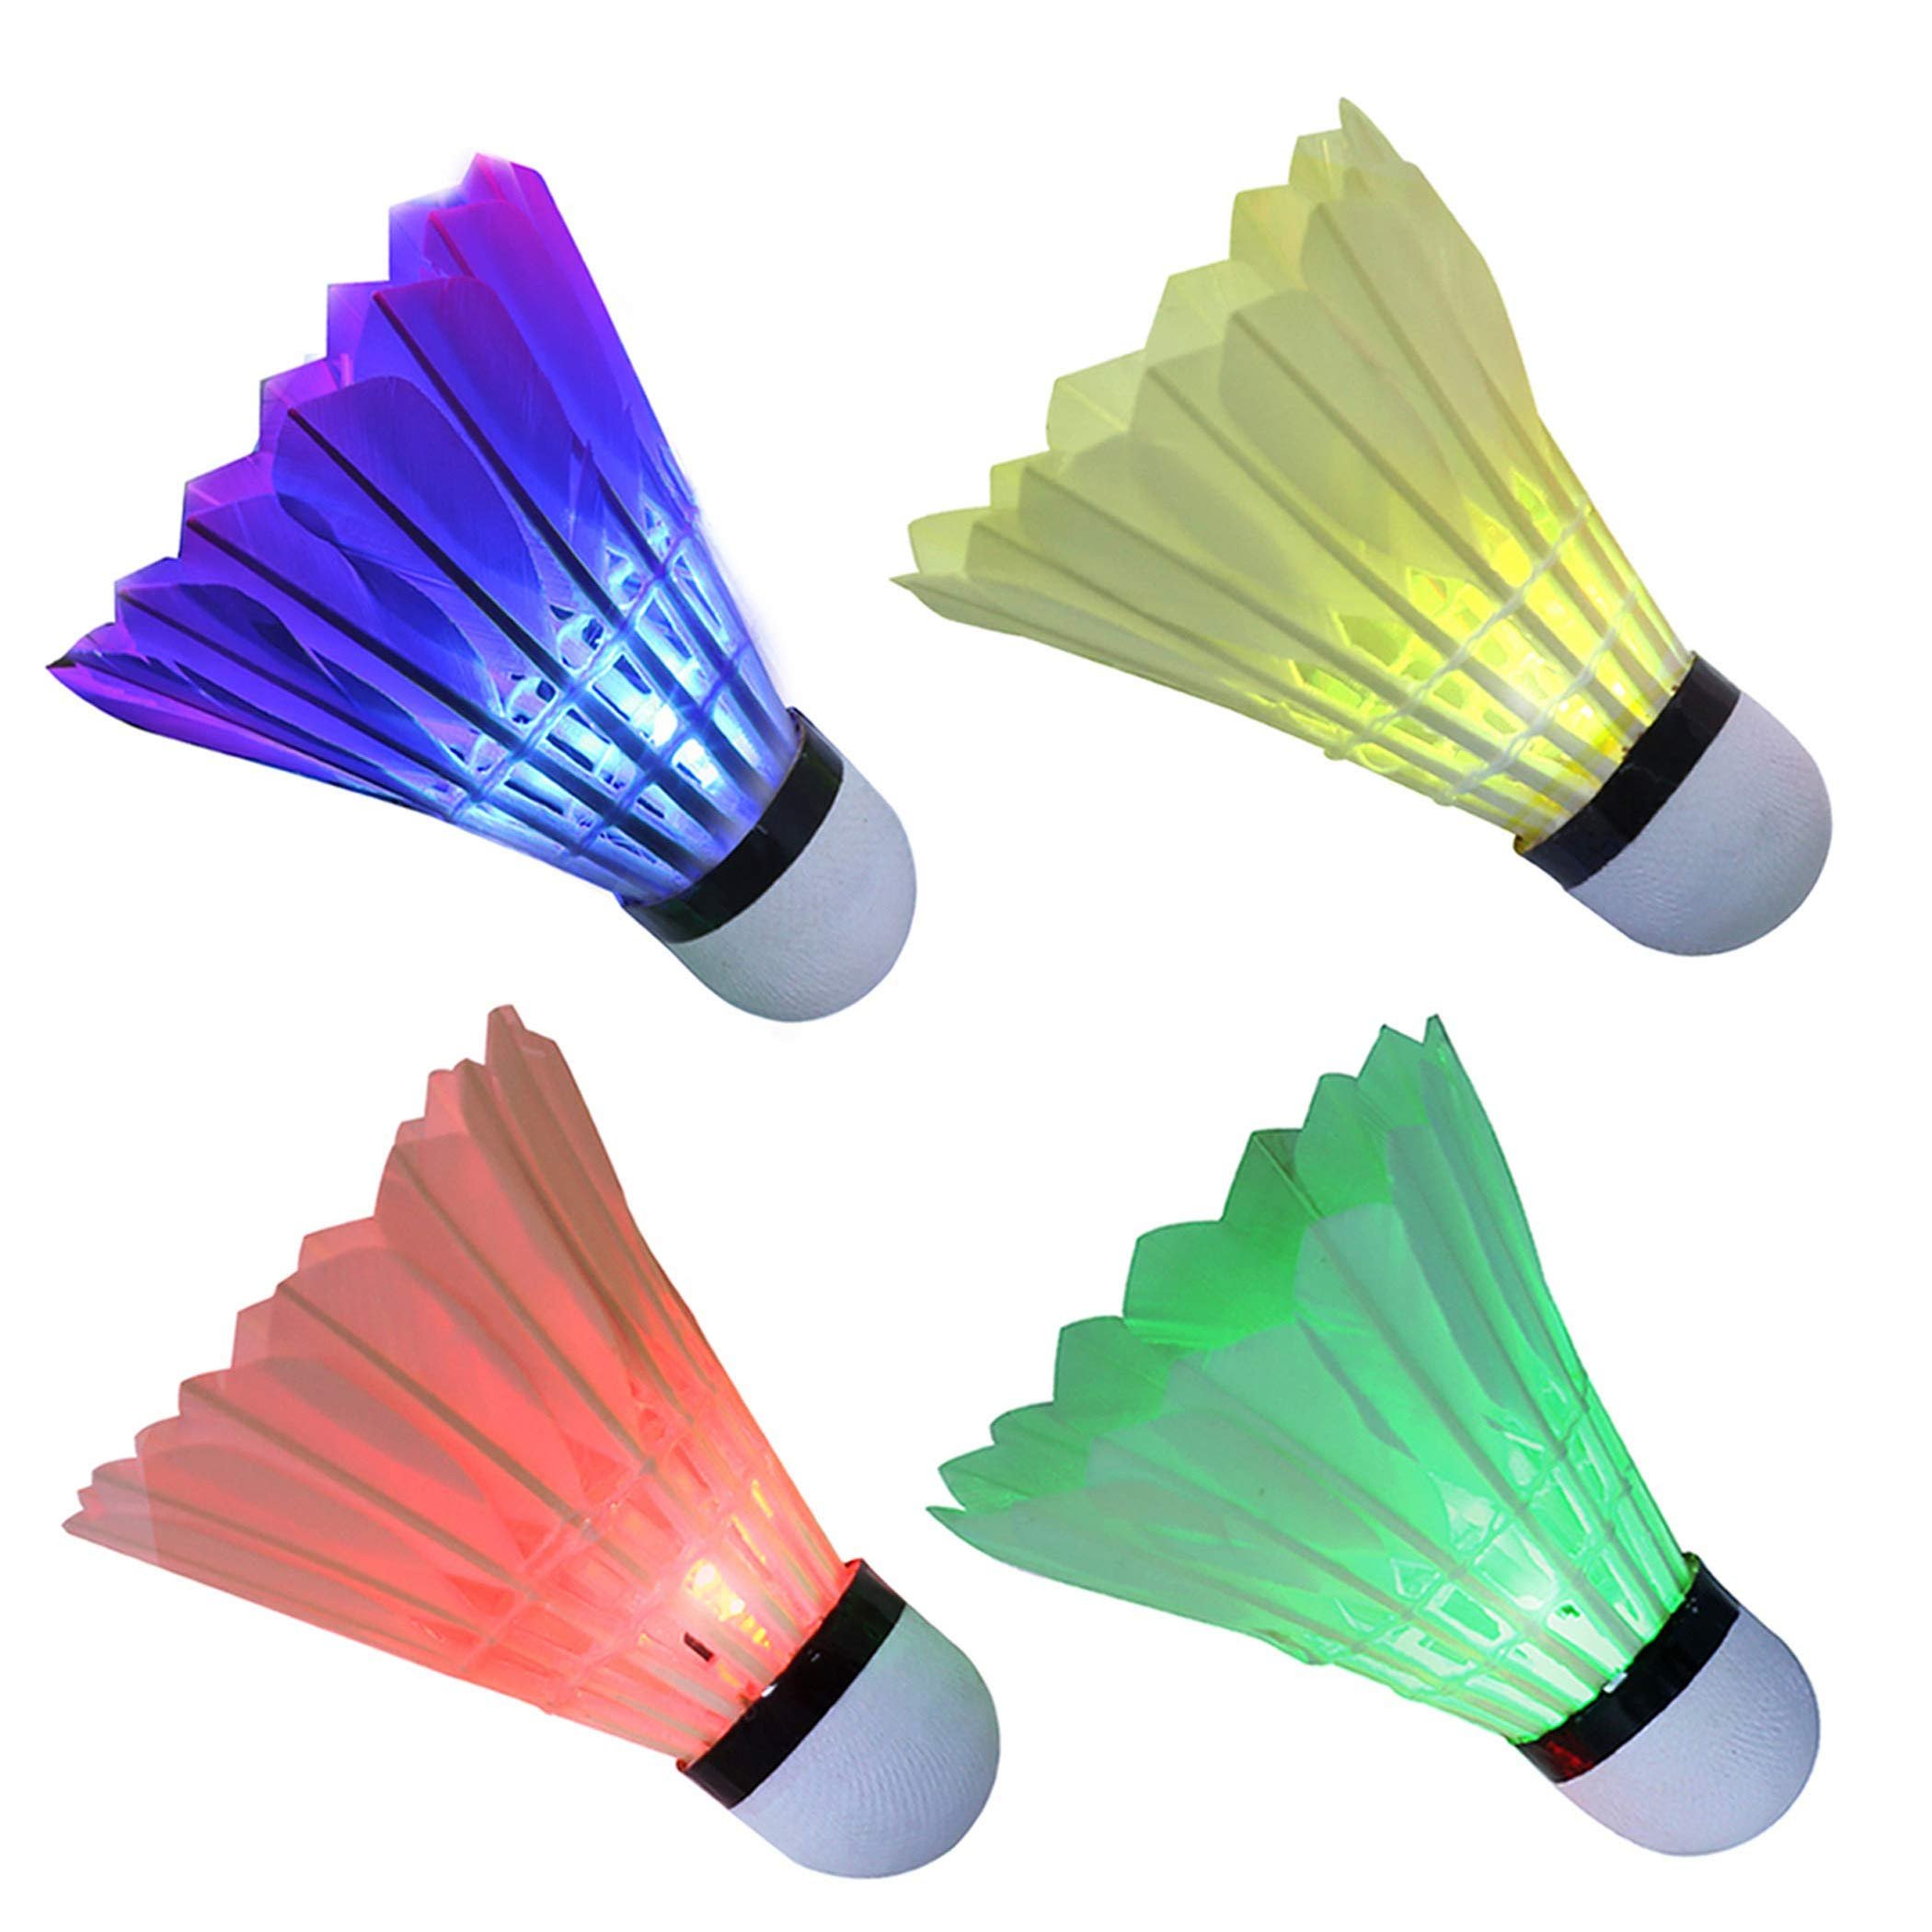 Durable Lighting Badminton Birdies Glow in Dark Night LED Shuttlecock Hot Sale 